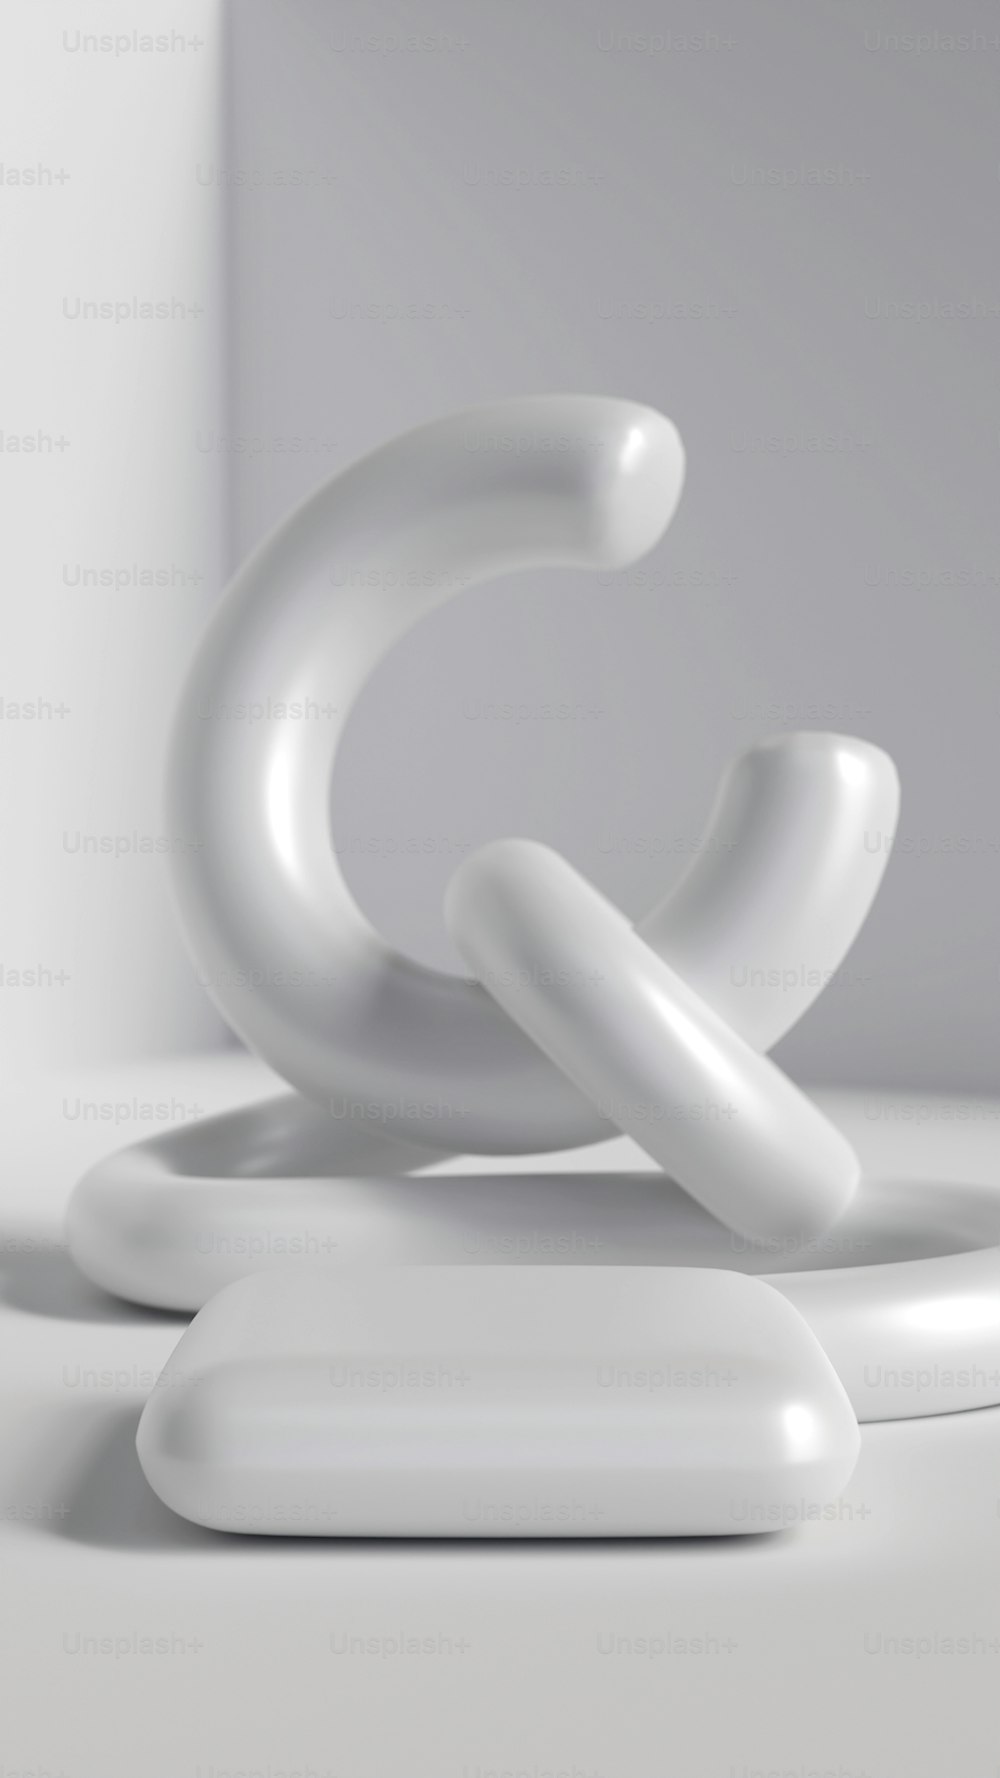 Un objeto blanco que parece una escultura